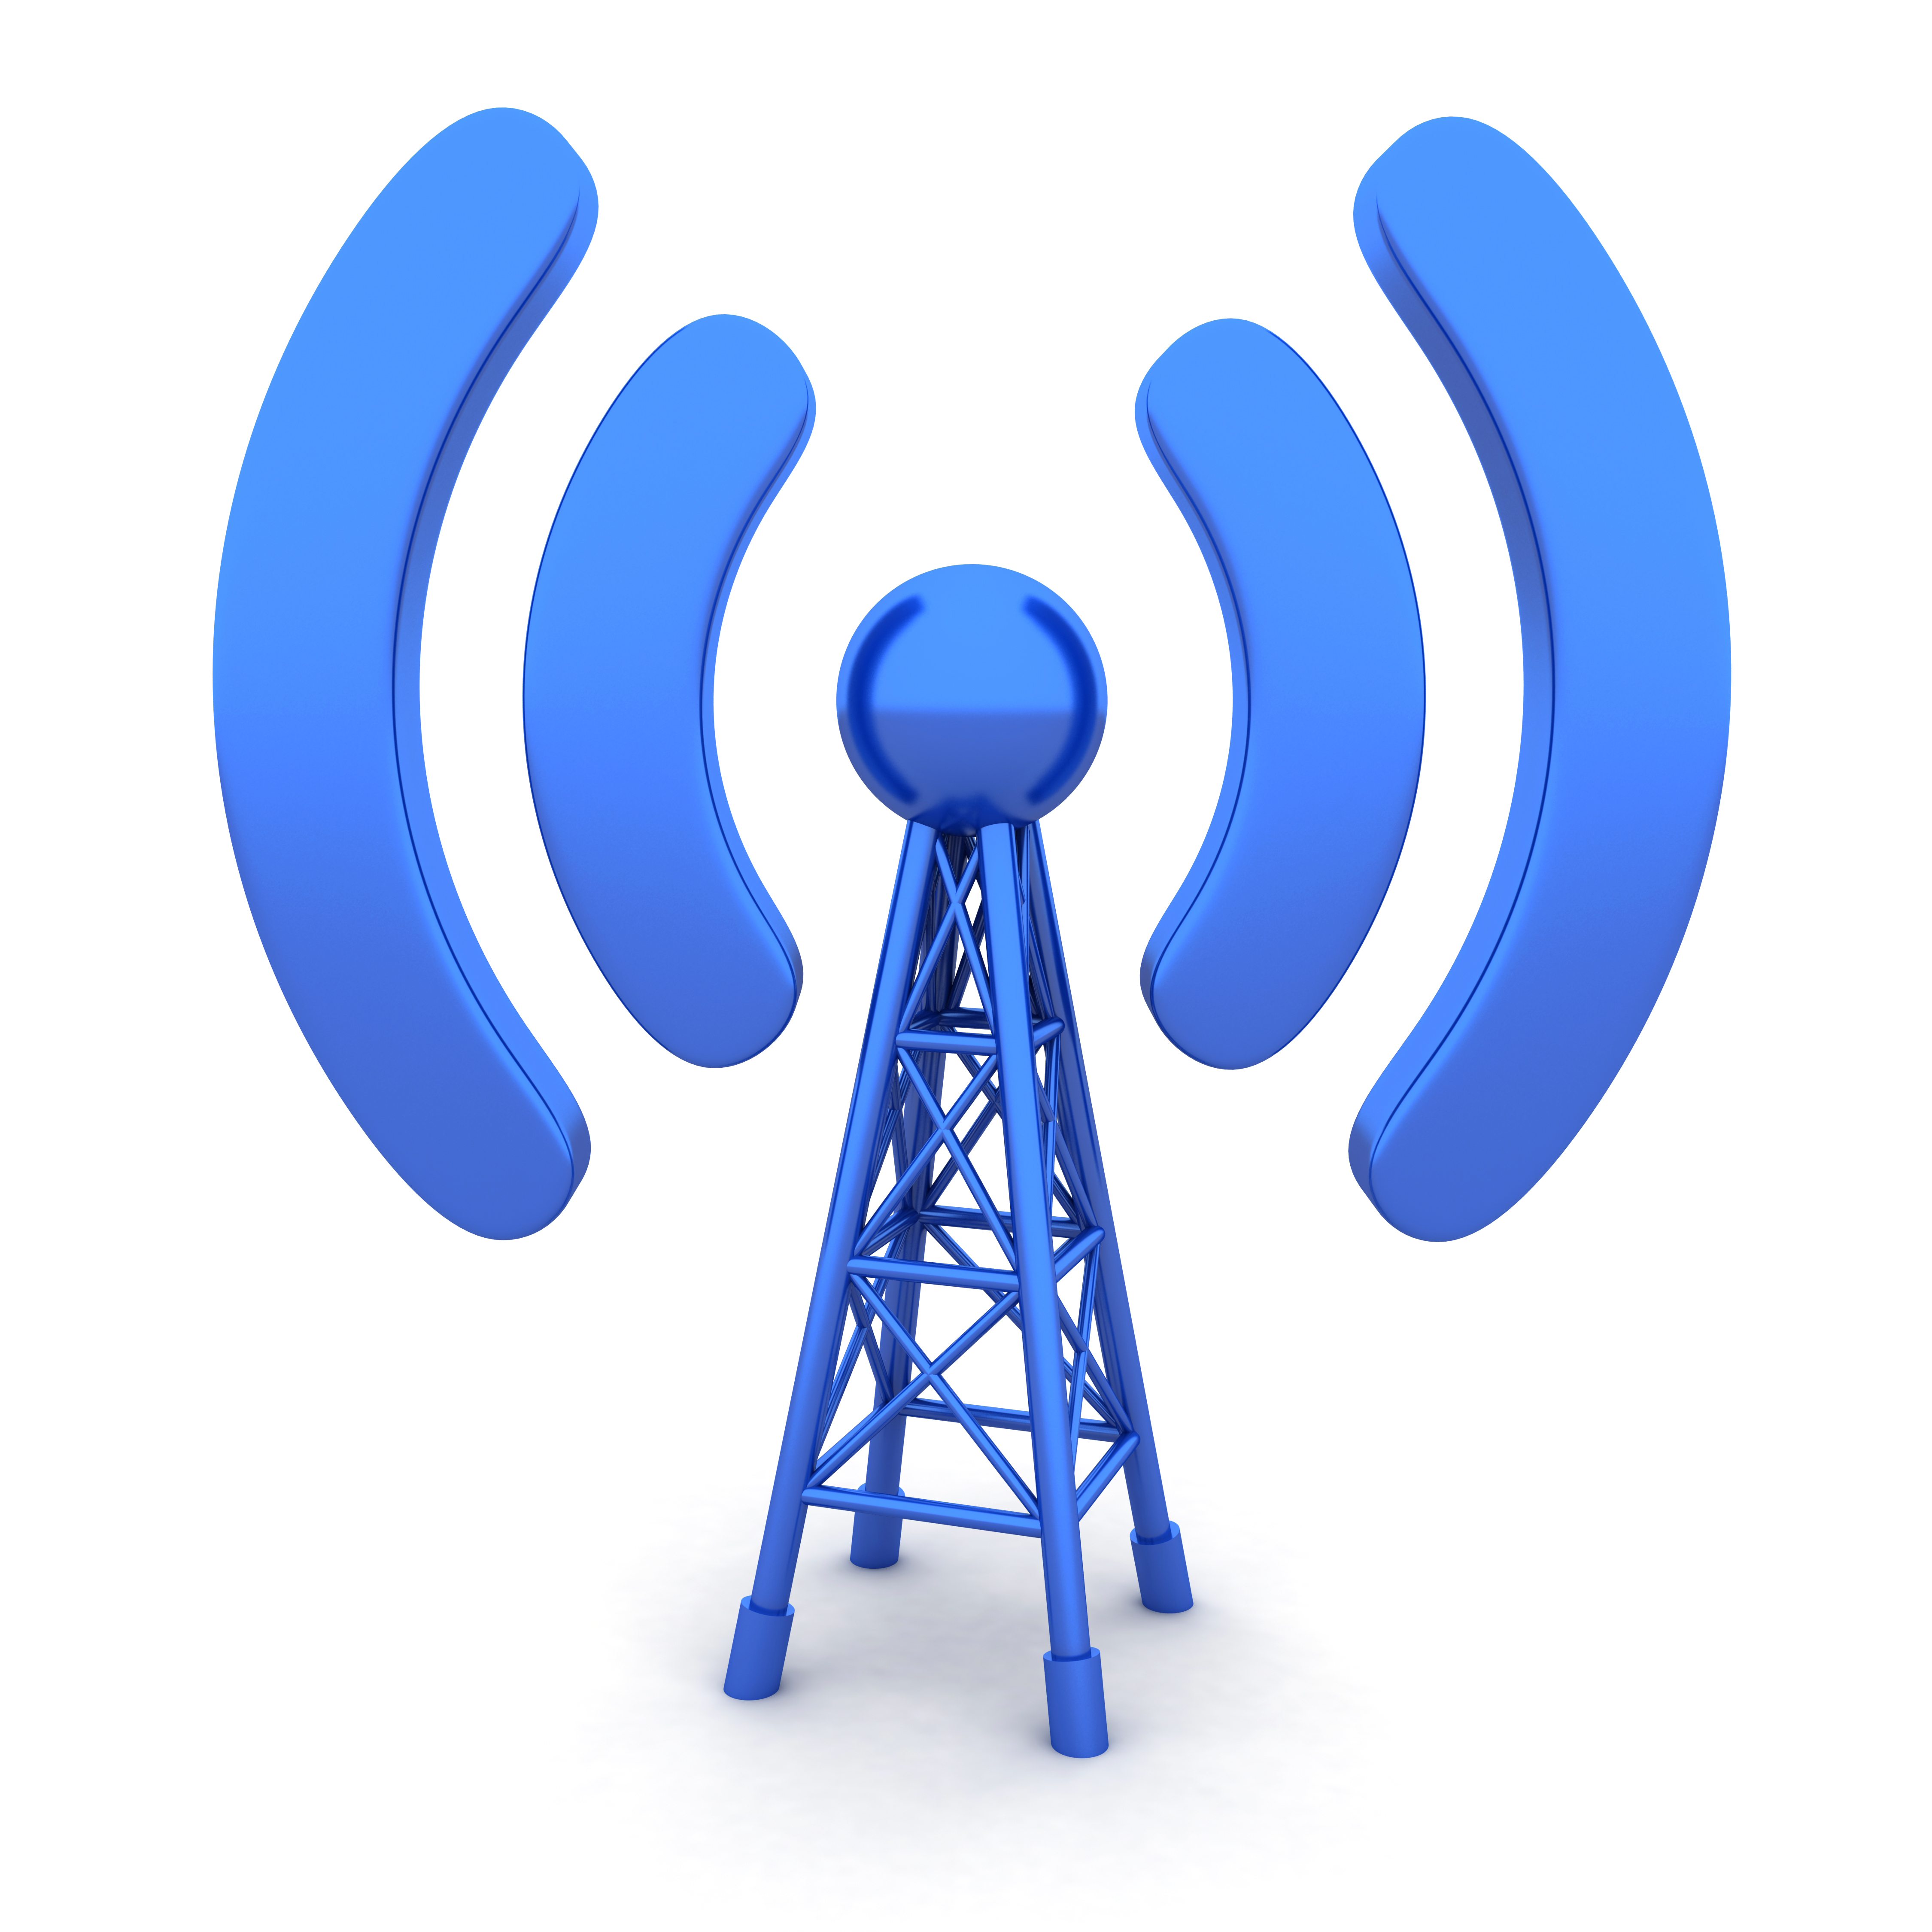 wireless network clipart free - photo #21